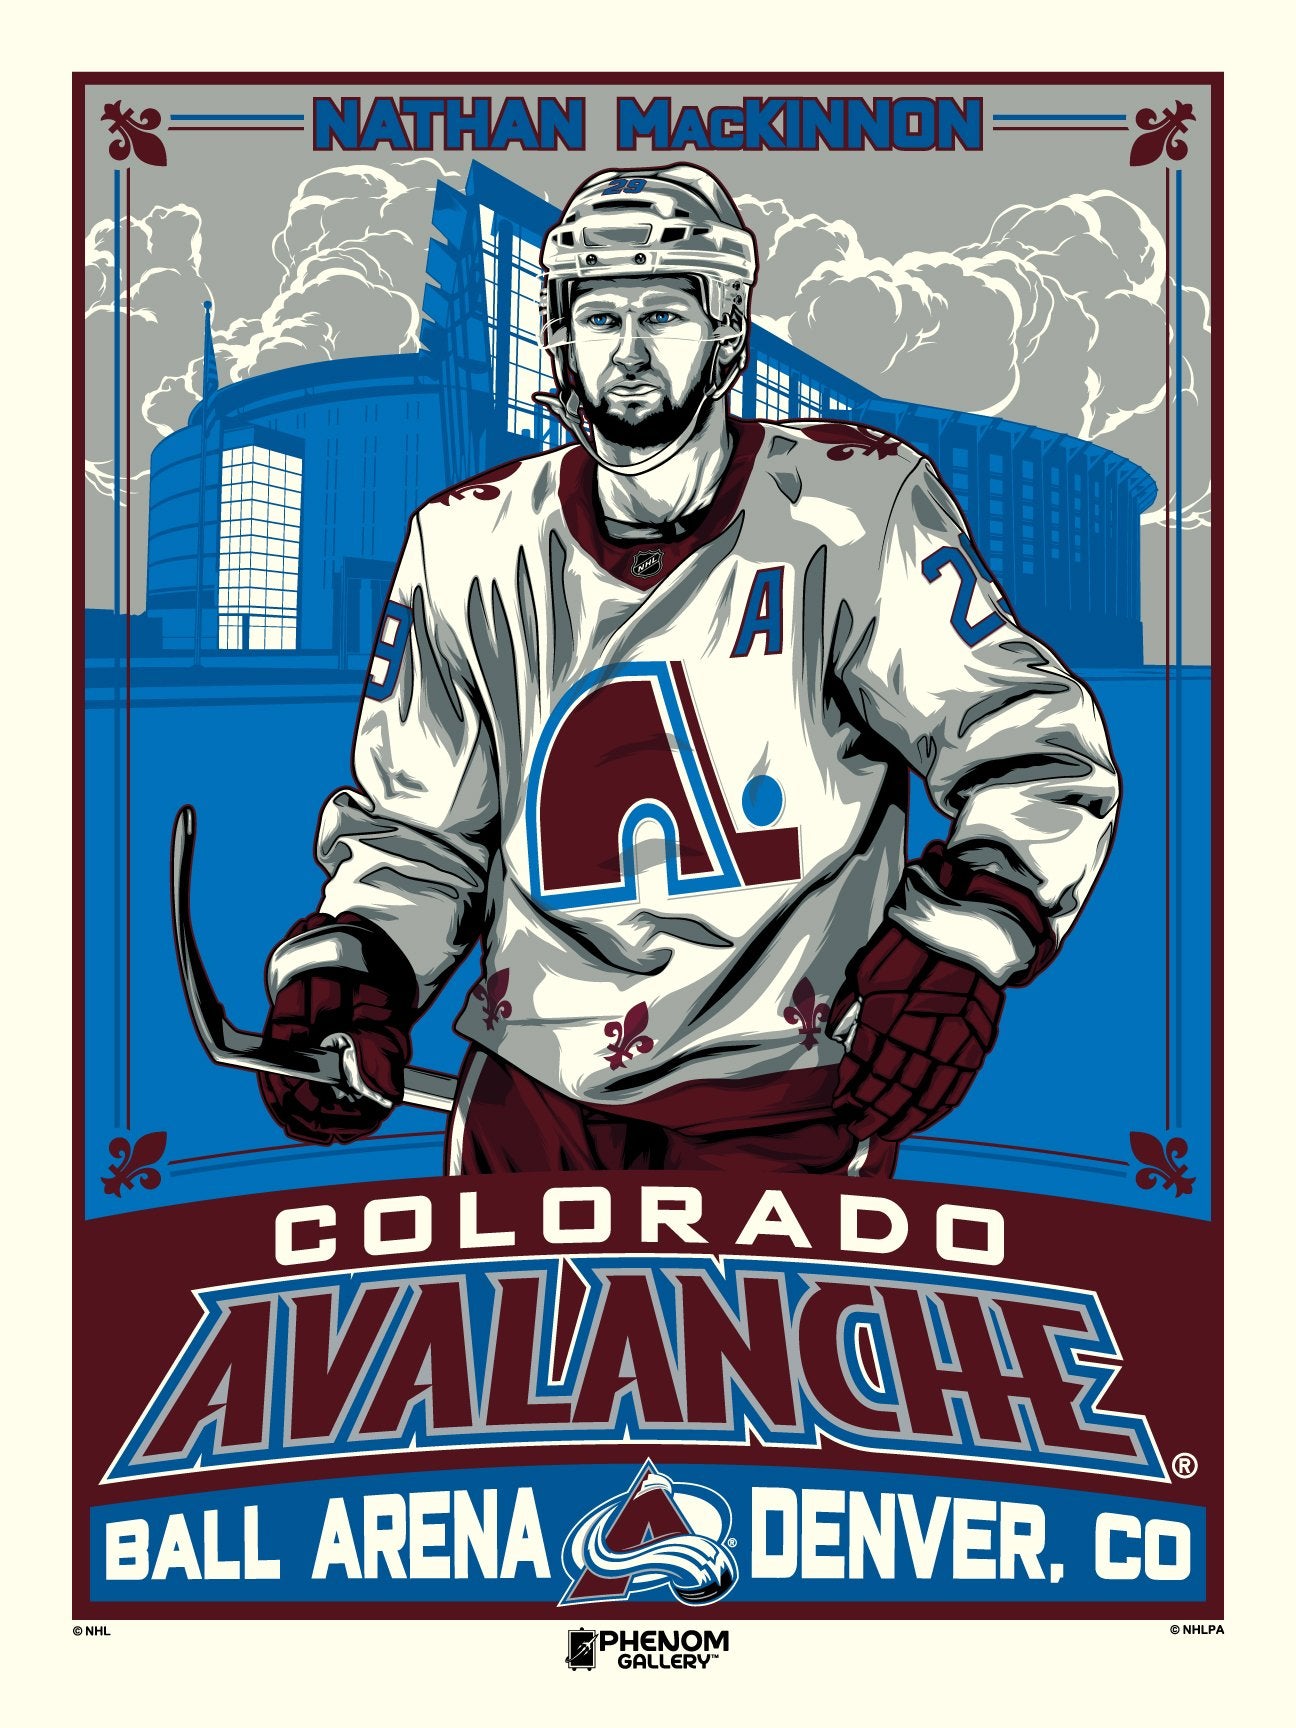 Official Colorado Avalanche Website